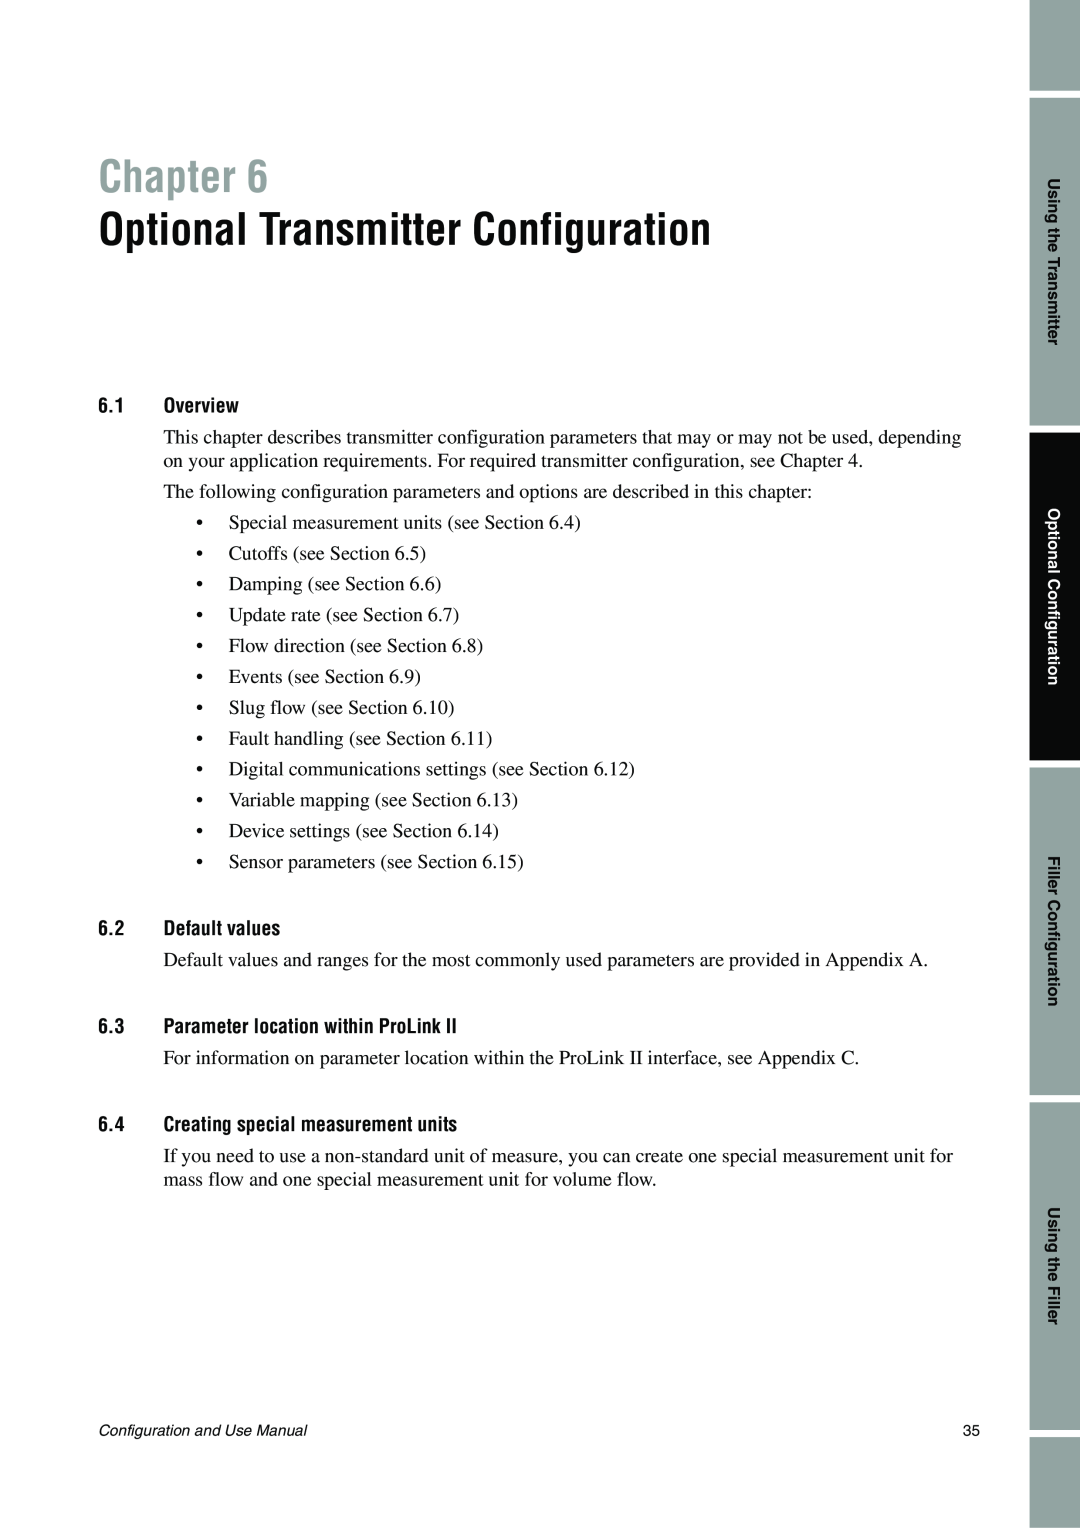 Emerson Process Management 1500 manual Optional Transmitter Configuration, Chapter, 6.1Overview, 6.2Default values 